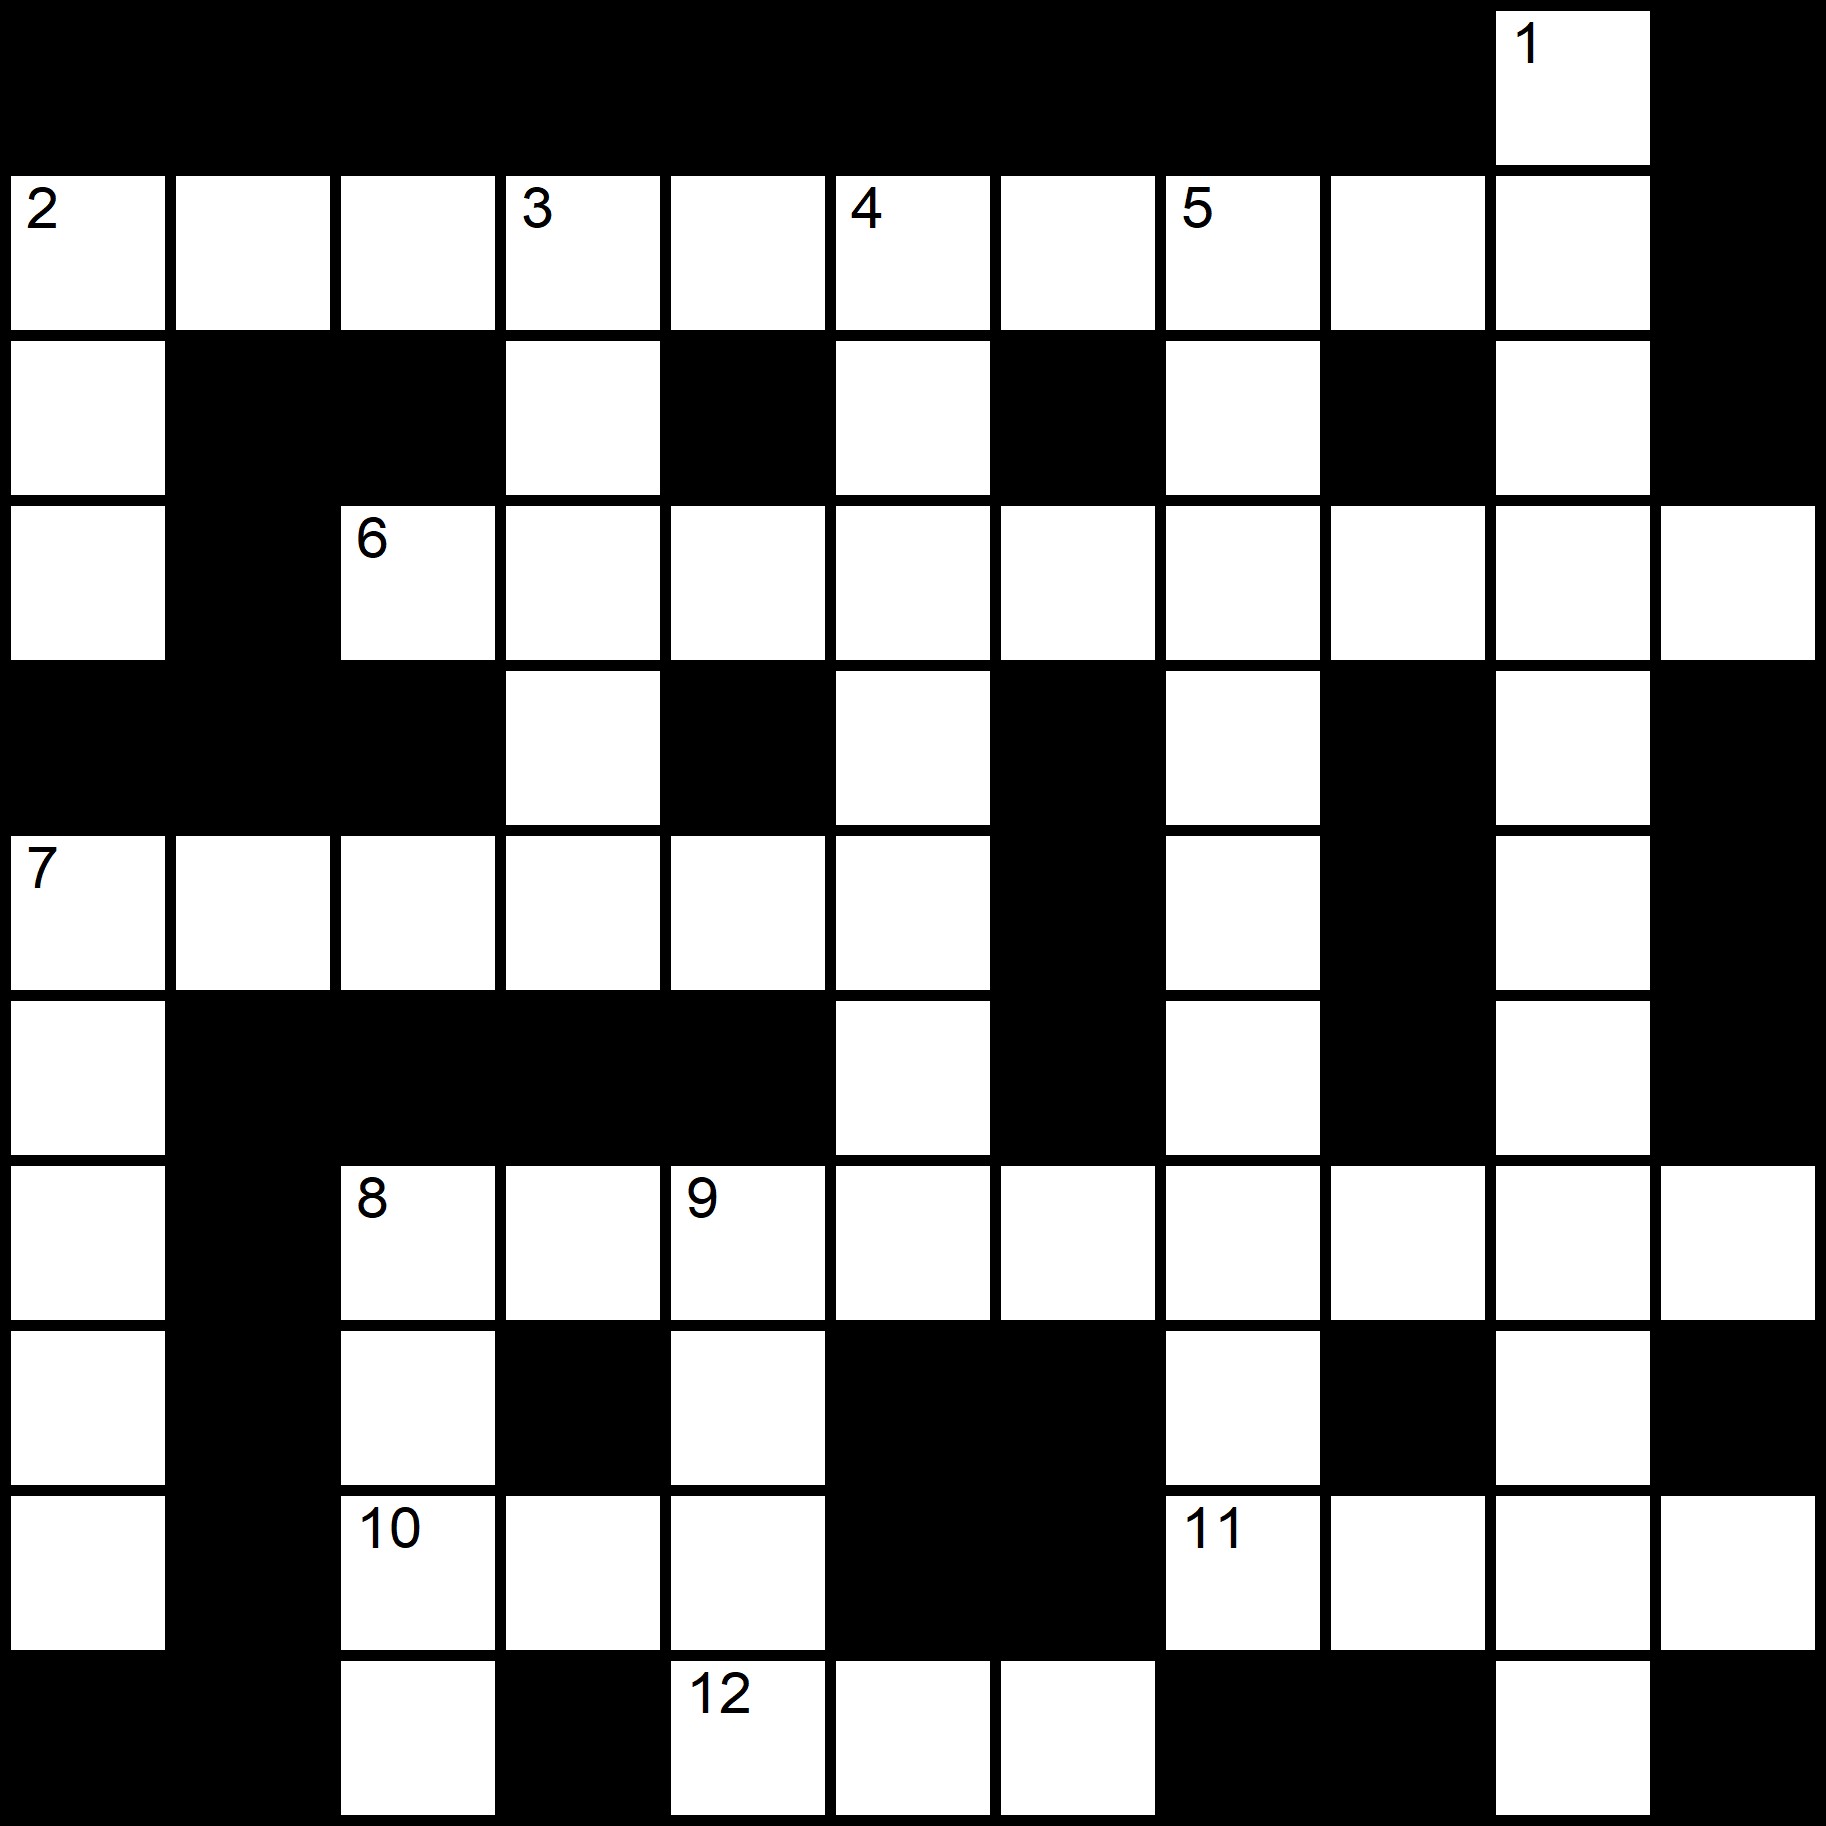 Beginner Crossword Puzzles Printable -
Amsterdam - Crossword number One